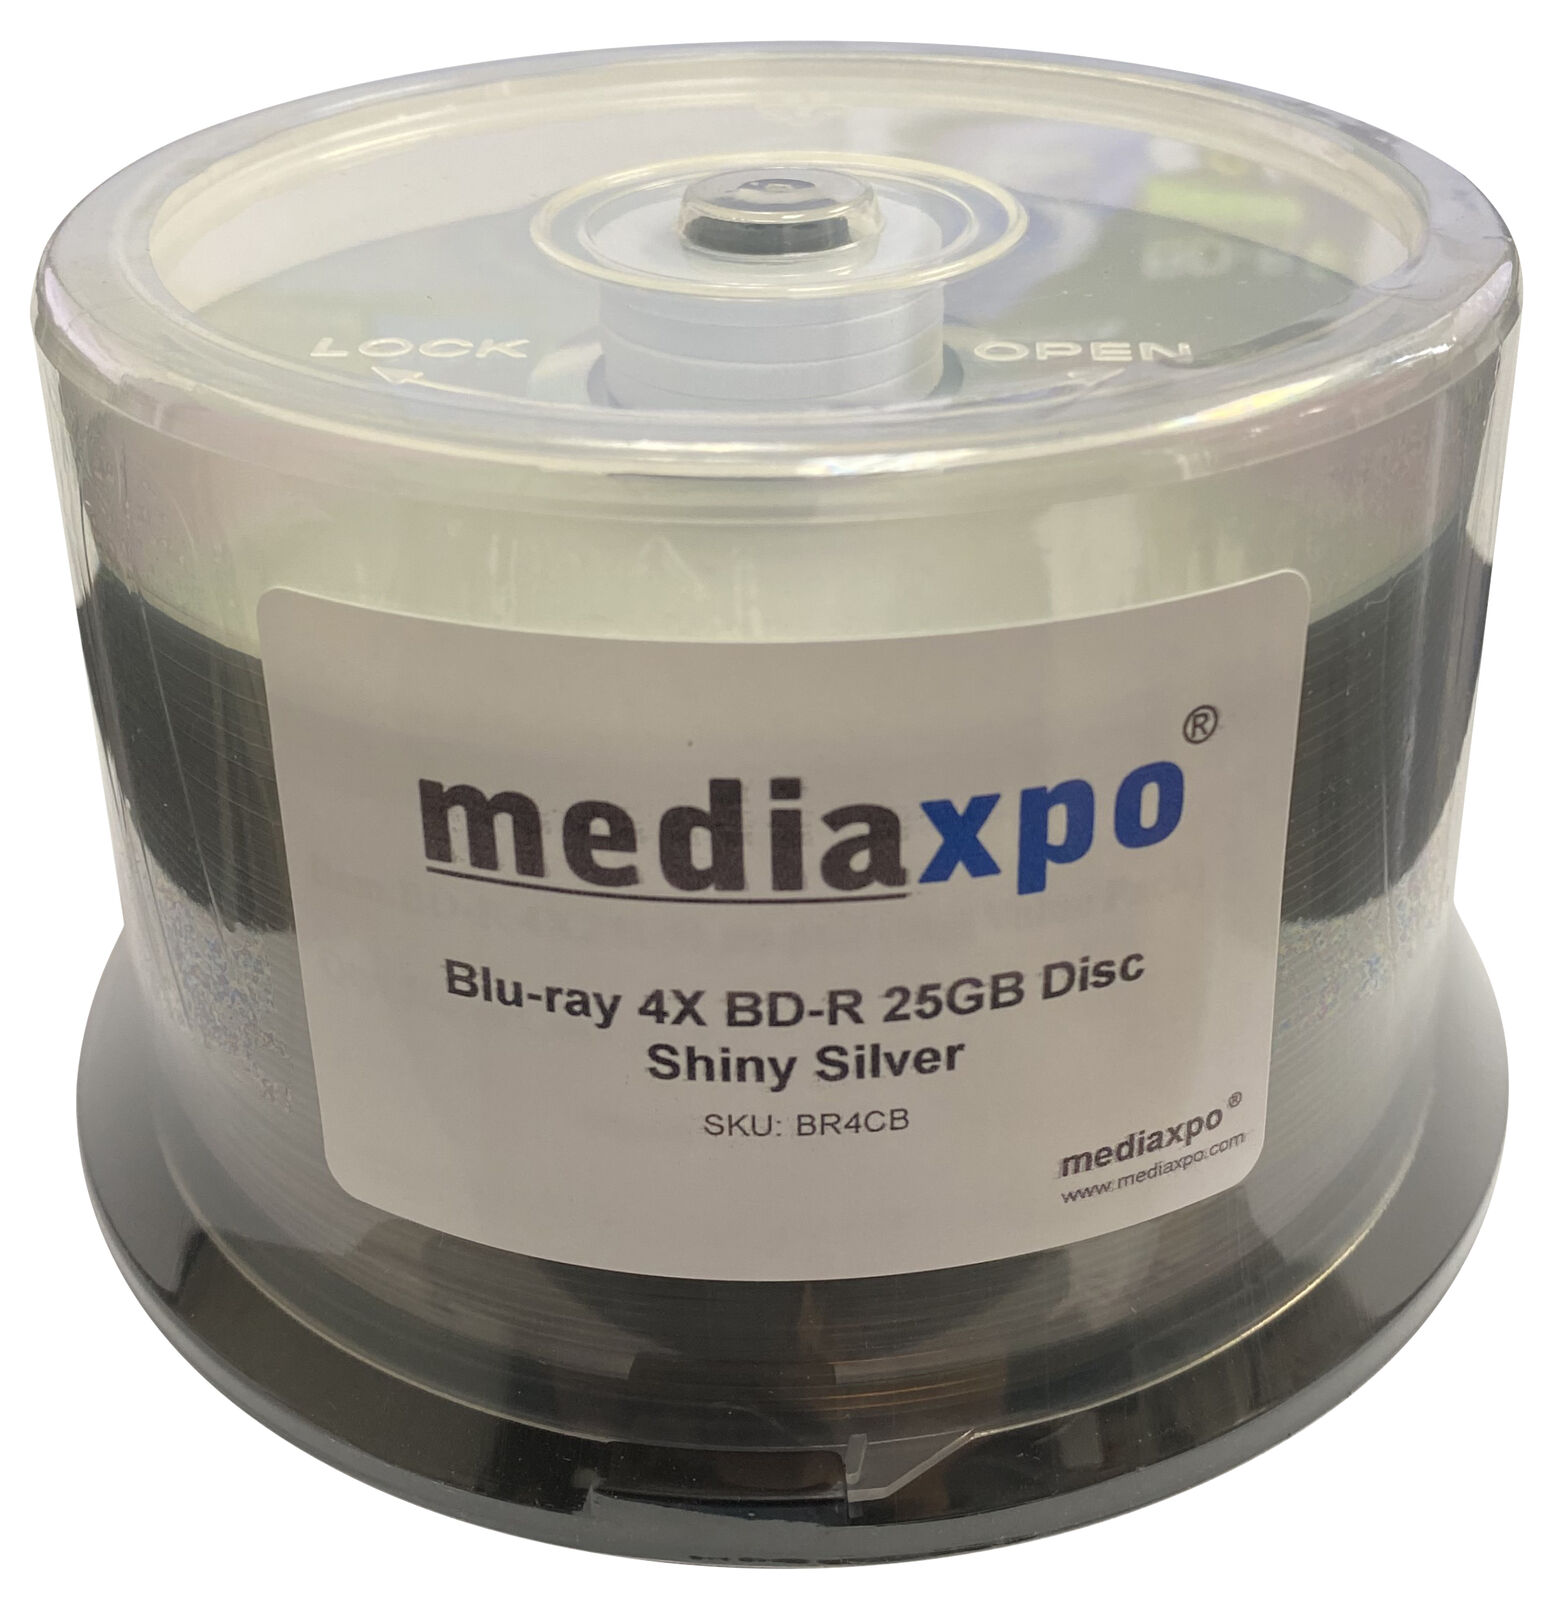 Grade A Blu-ray 4X BD-R 25GB Disc Shiny Silver Lot